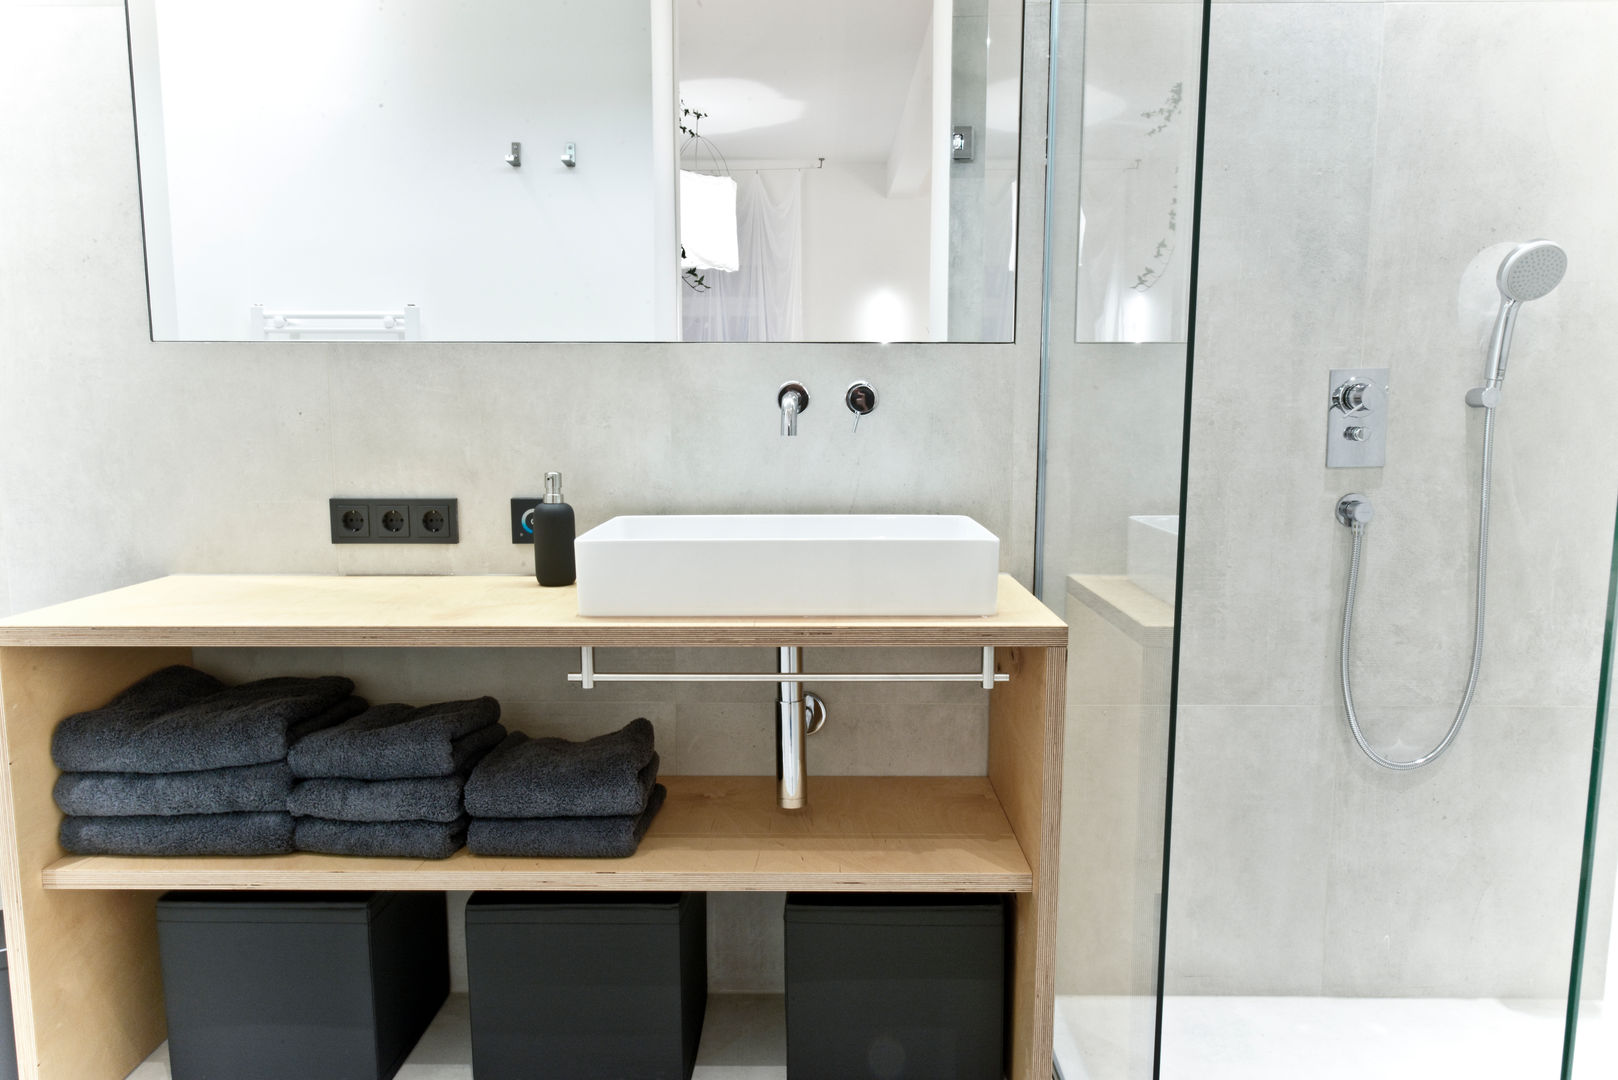 70 qm Loft, freudenspiel - Interior Design freudenspiel - Interior Design モダンスタイルの お風呂